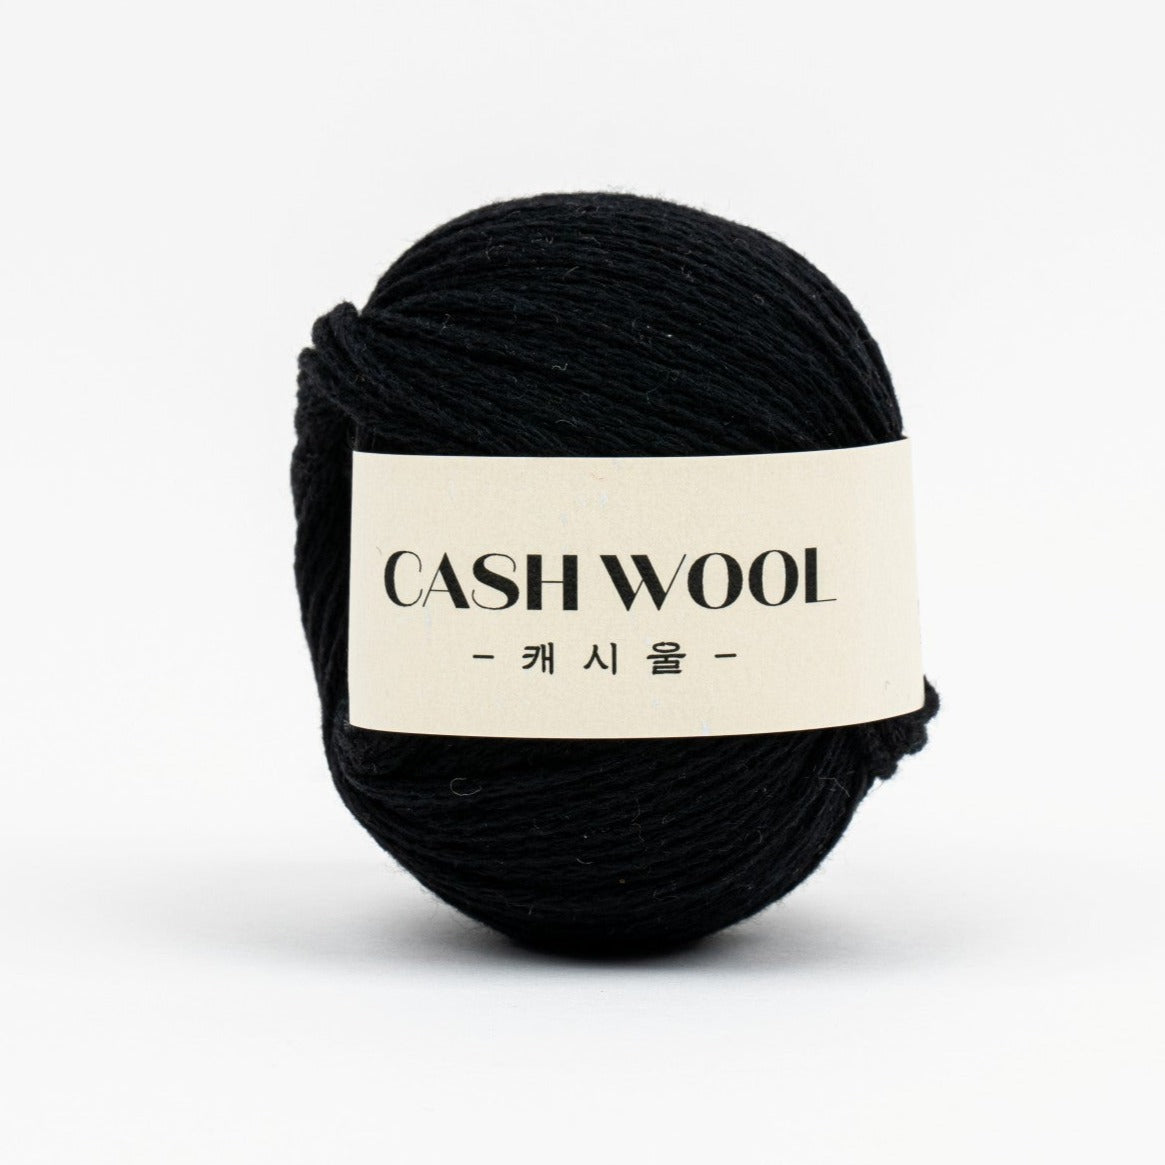 Cashwool, Cashmere Wool Nylon Mixed Yarn, 10 Pretty Colors